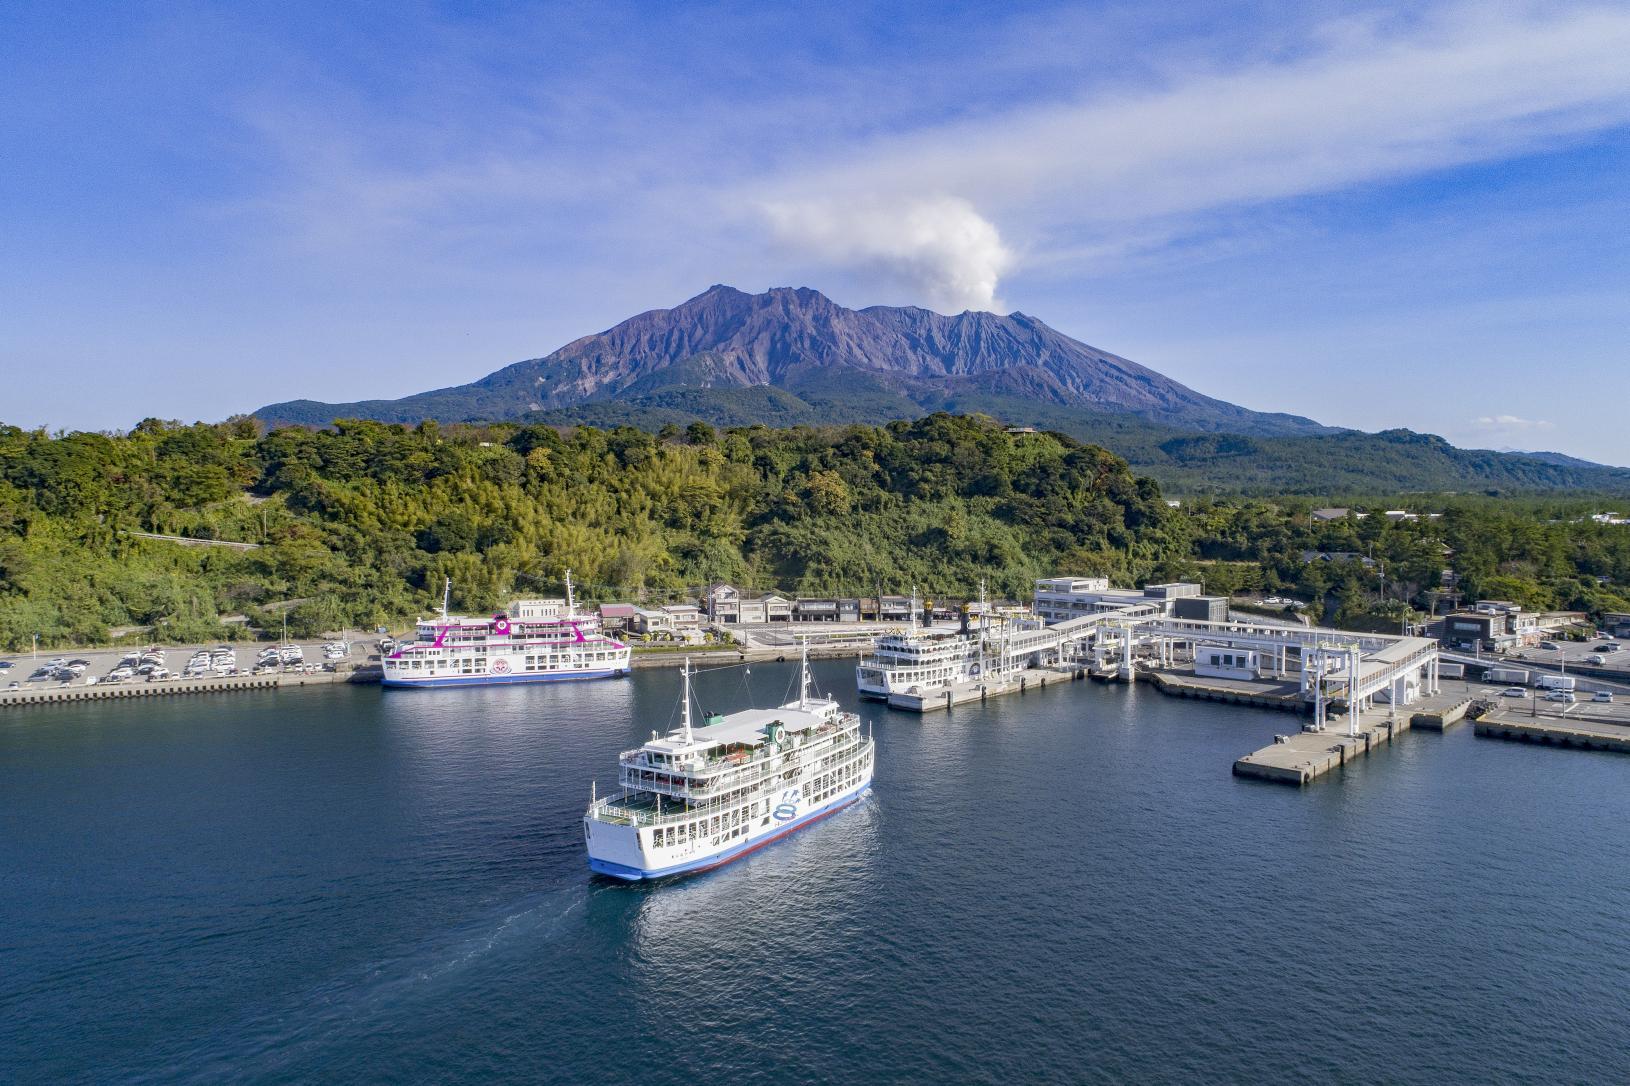 Top 5 famous spots of Sakurajima according to ANA cabin crew-1